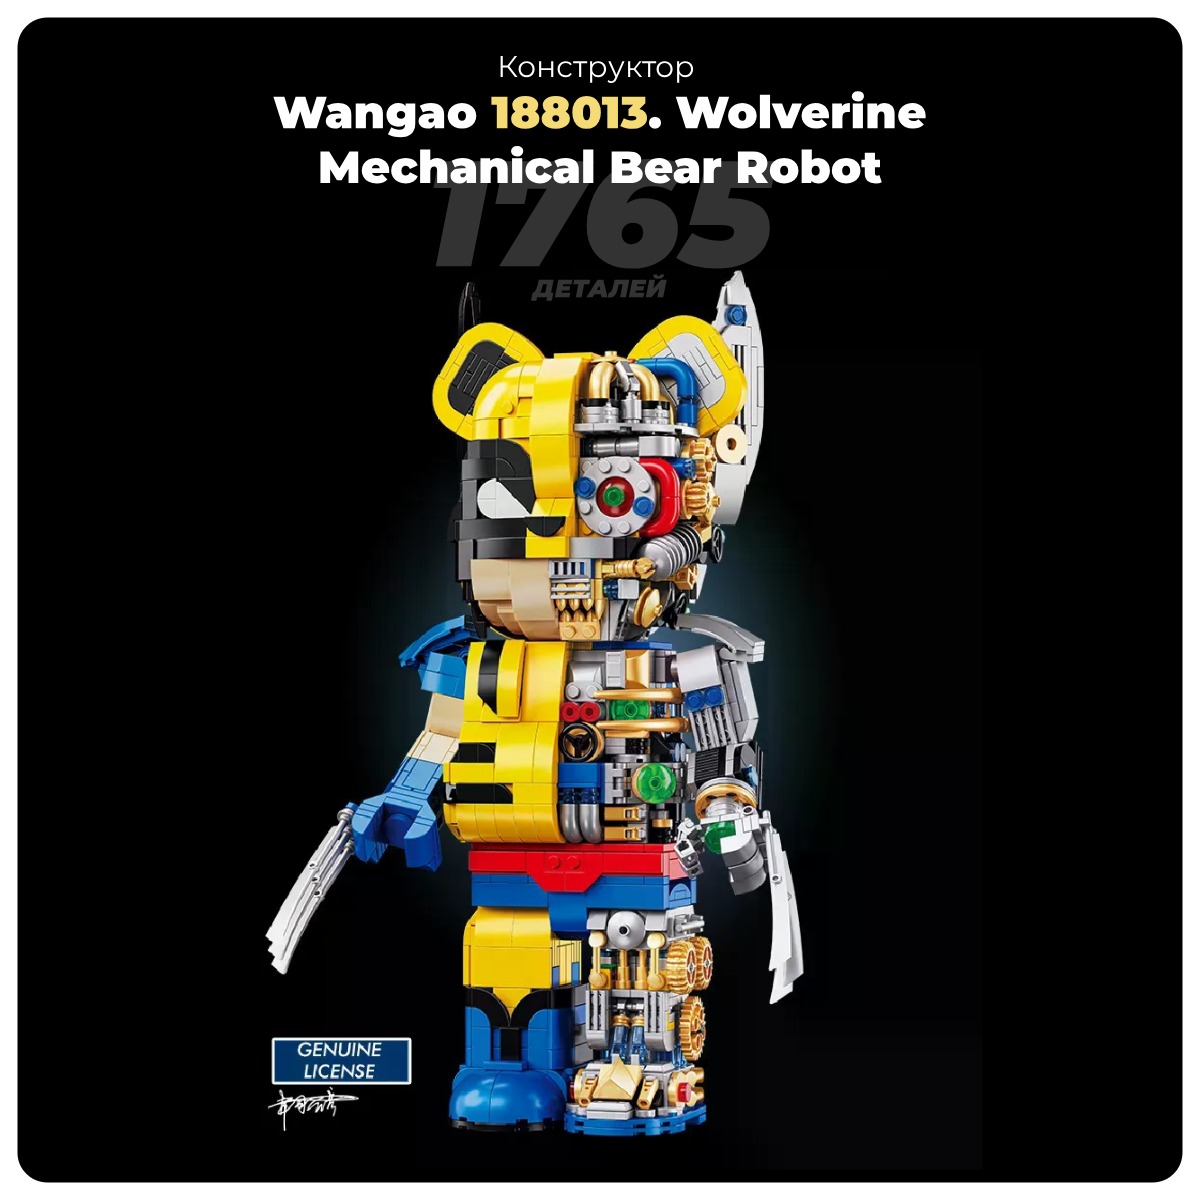 Wangao-188013-Wolverine-Mechanical-Bear-Robot-01